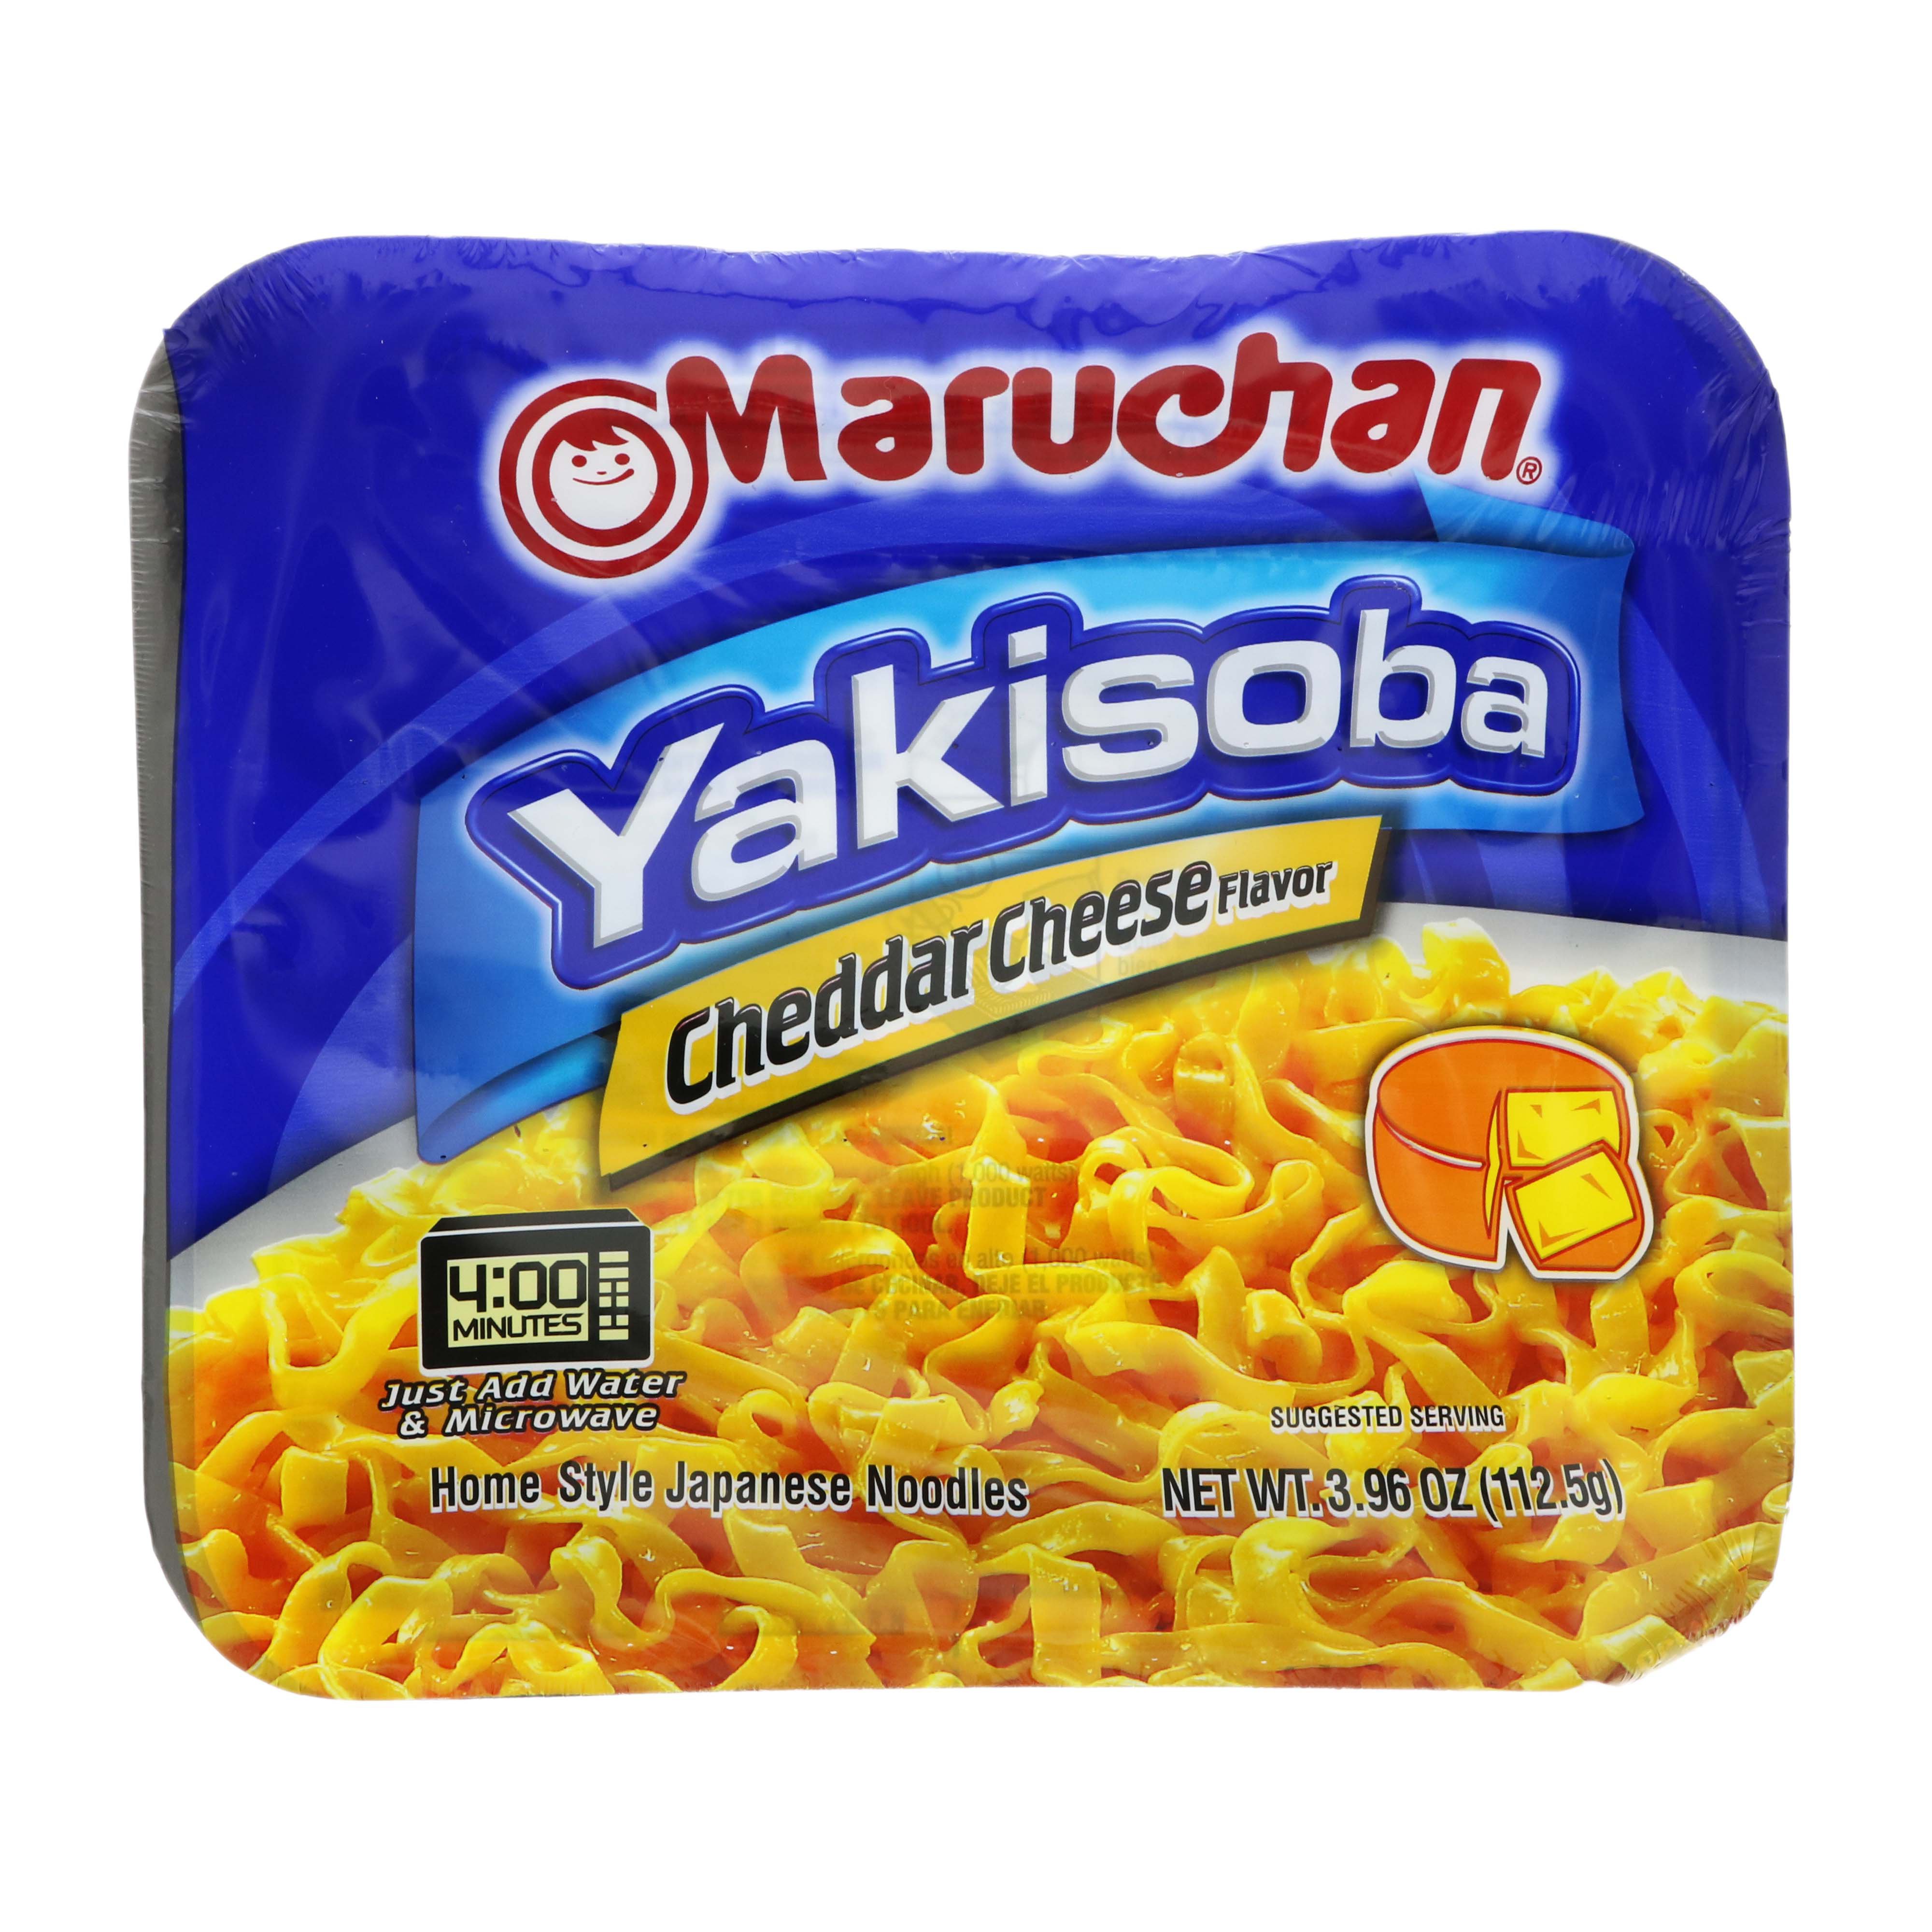 Maruchan Yakisoba Cheddar Cheese Flavor